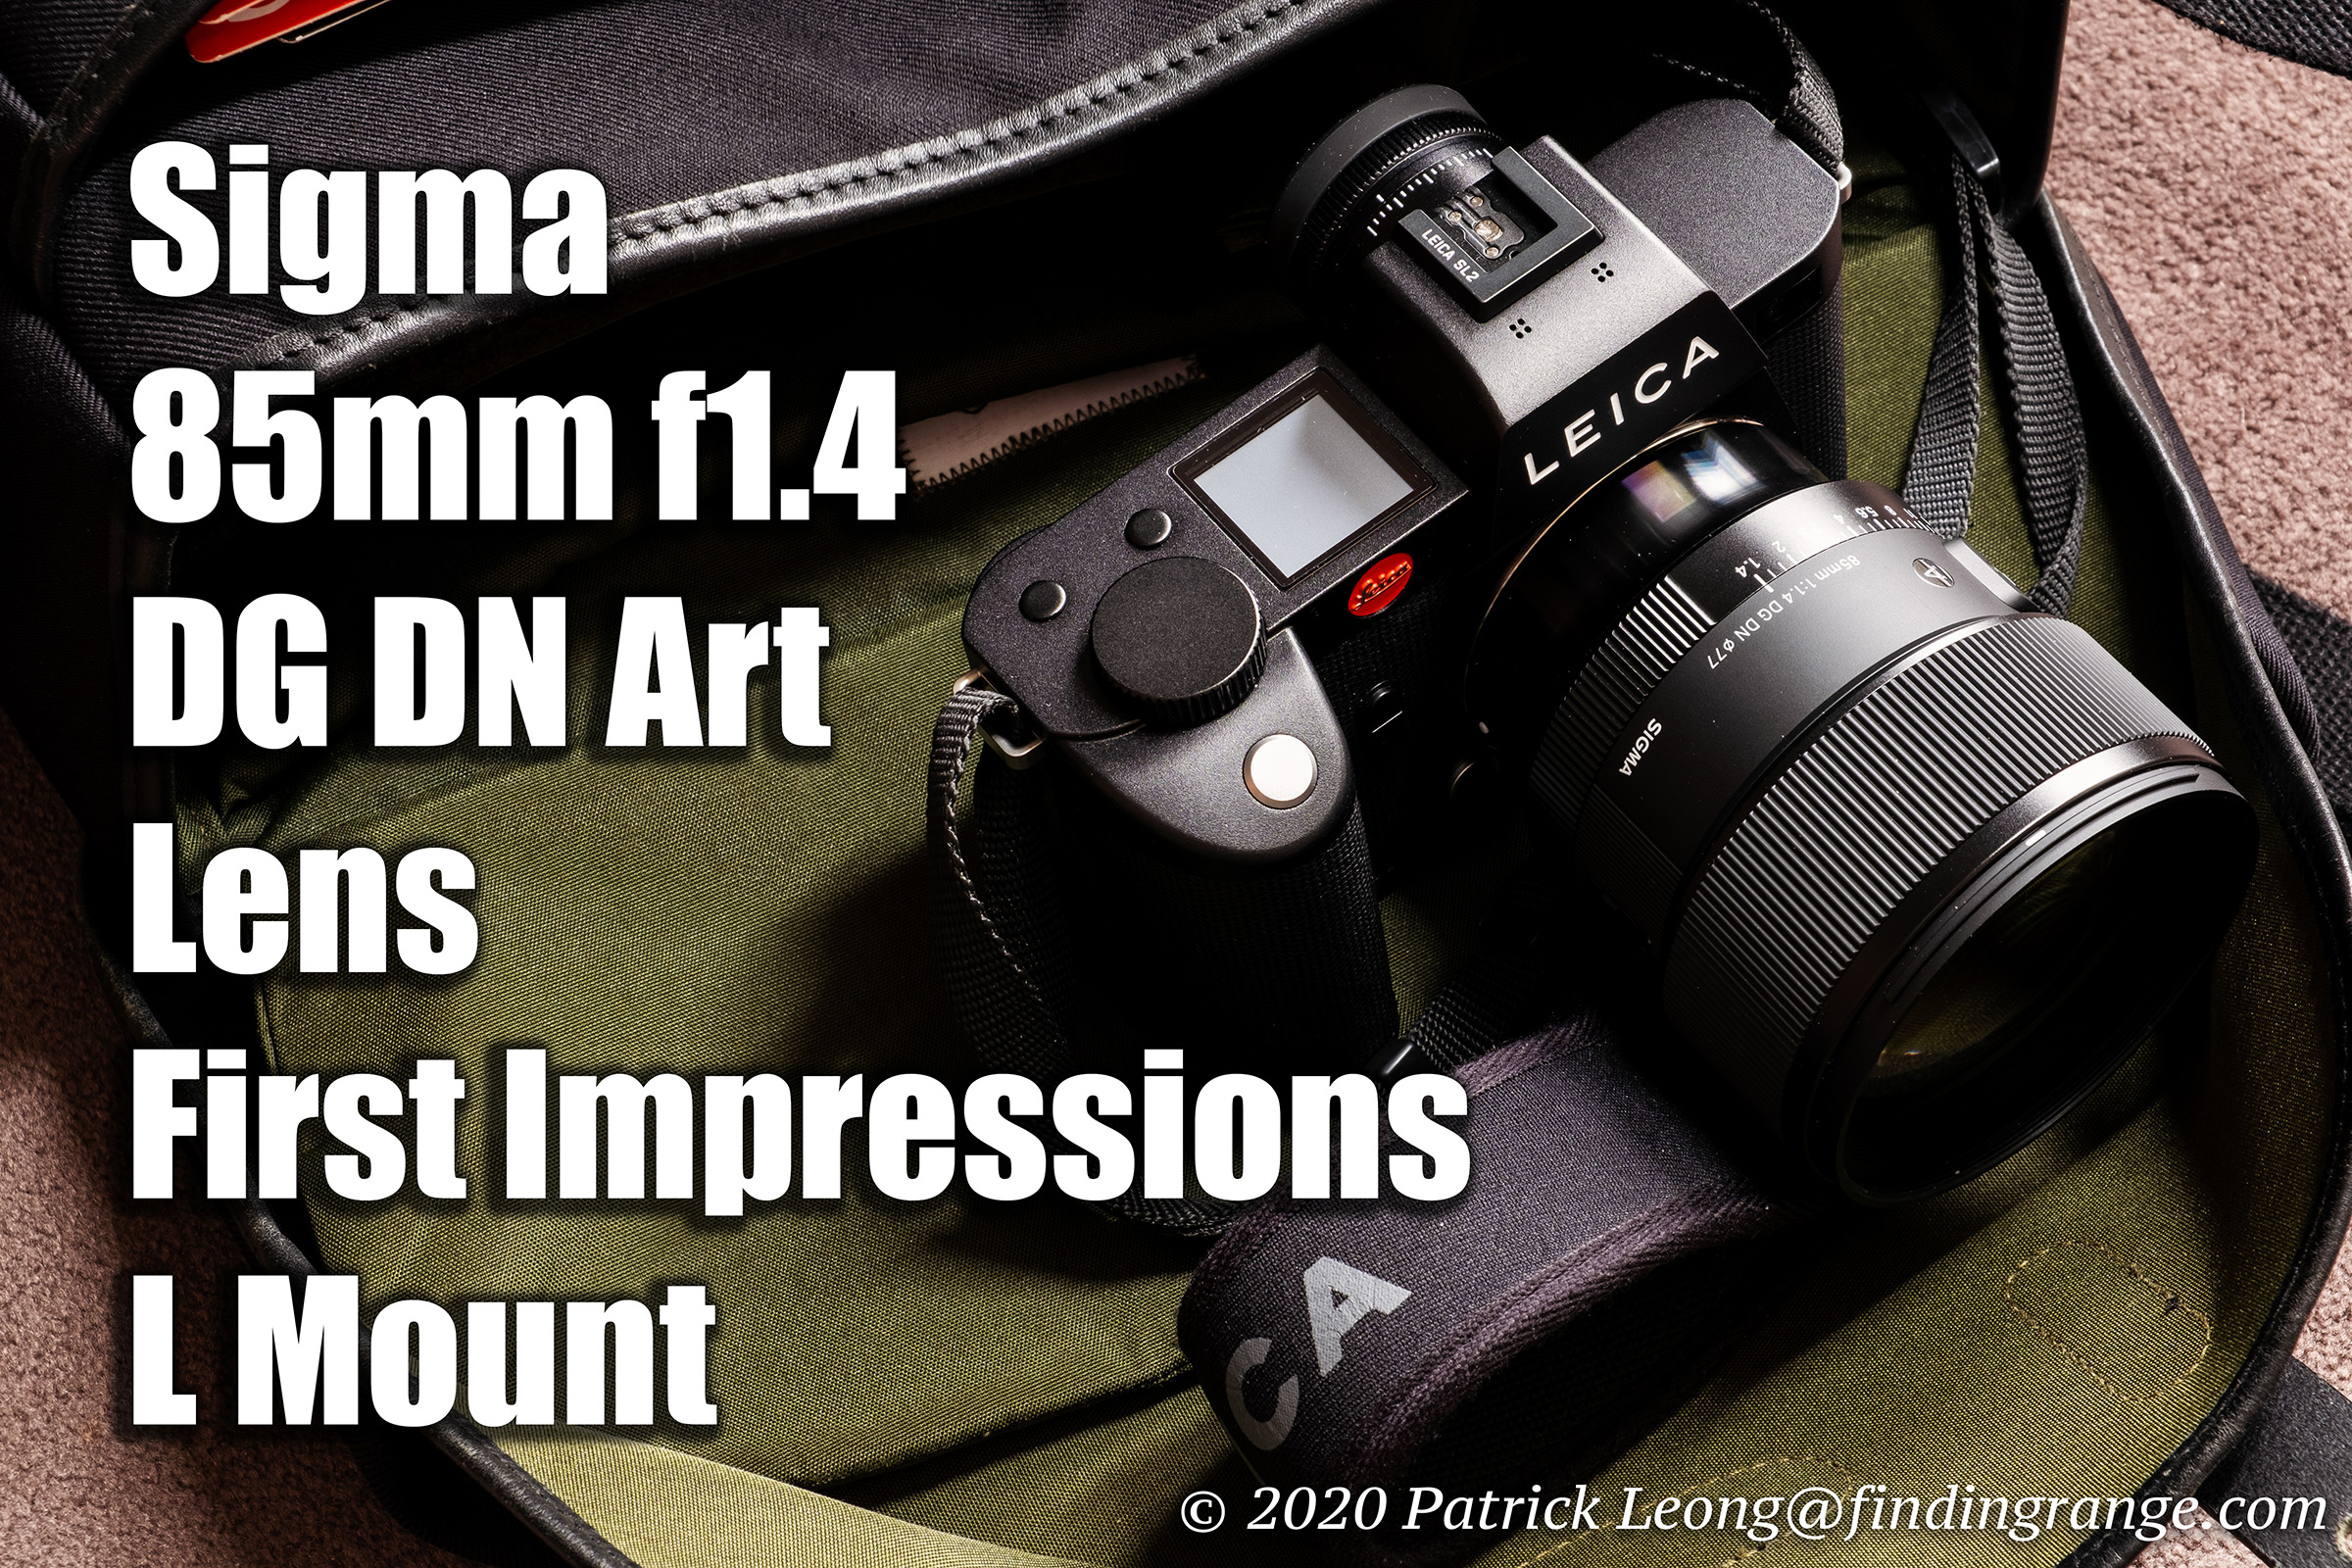 Sigma 85mm f1.4 DG DN Art Lens First Impressions L Mount